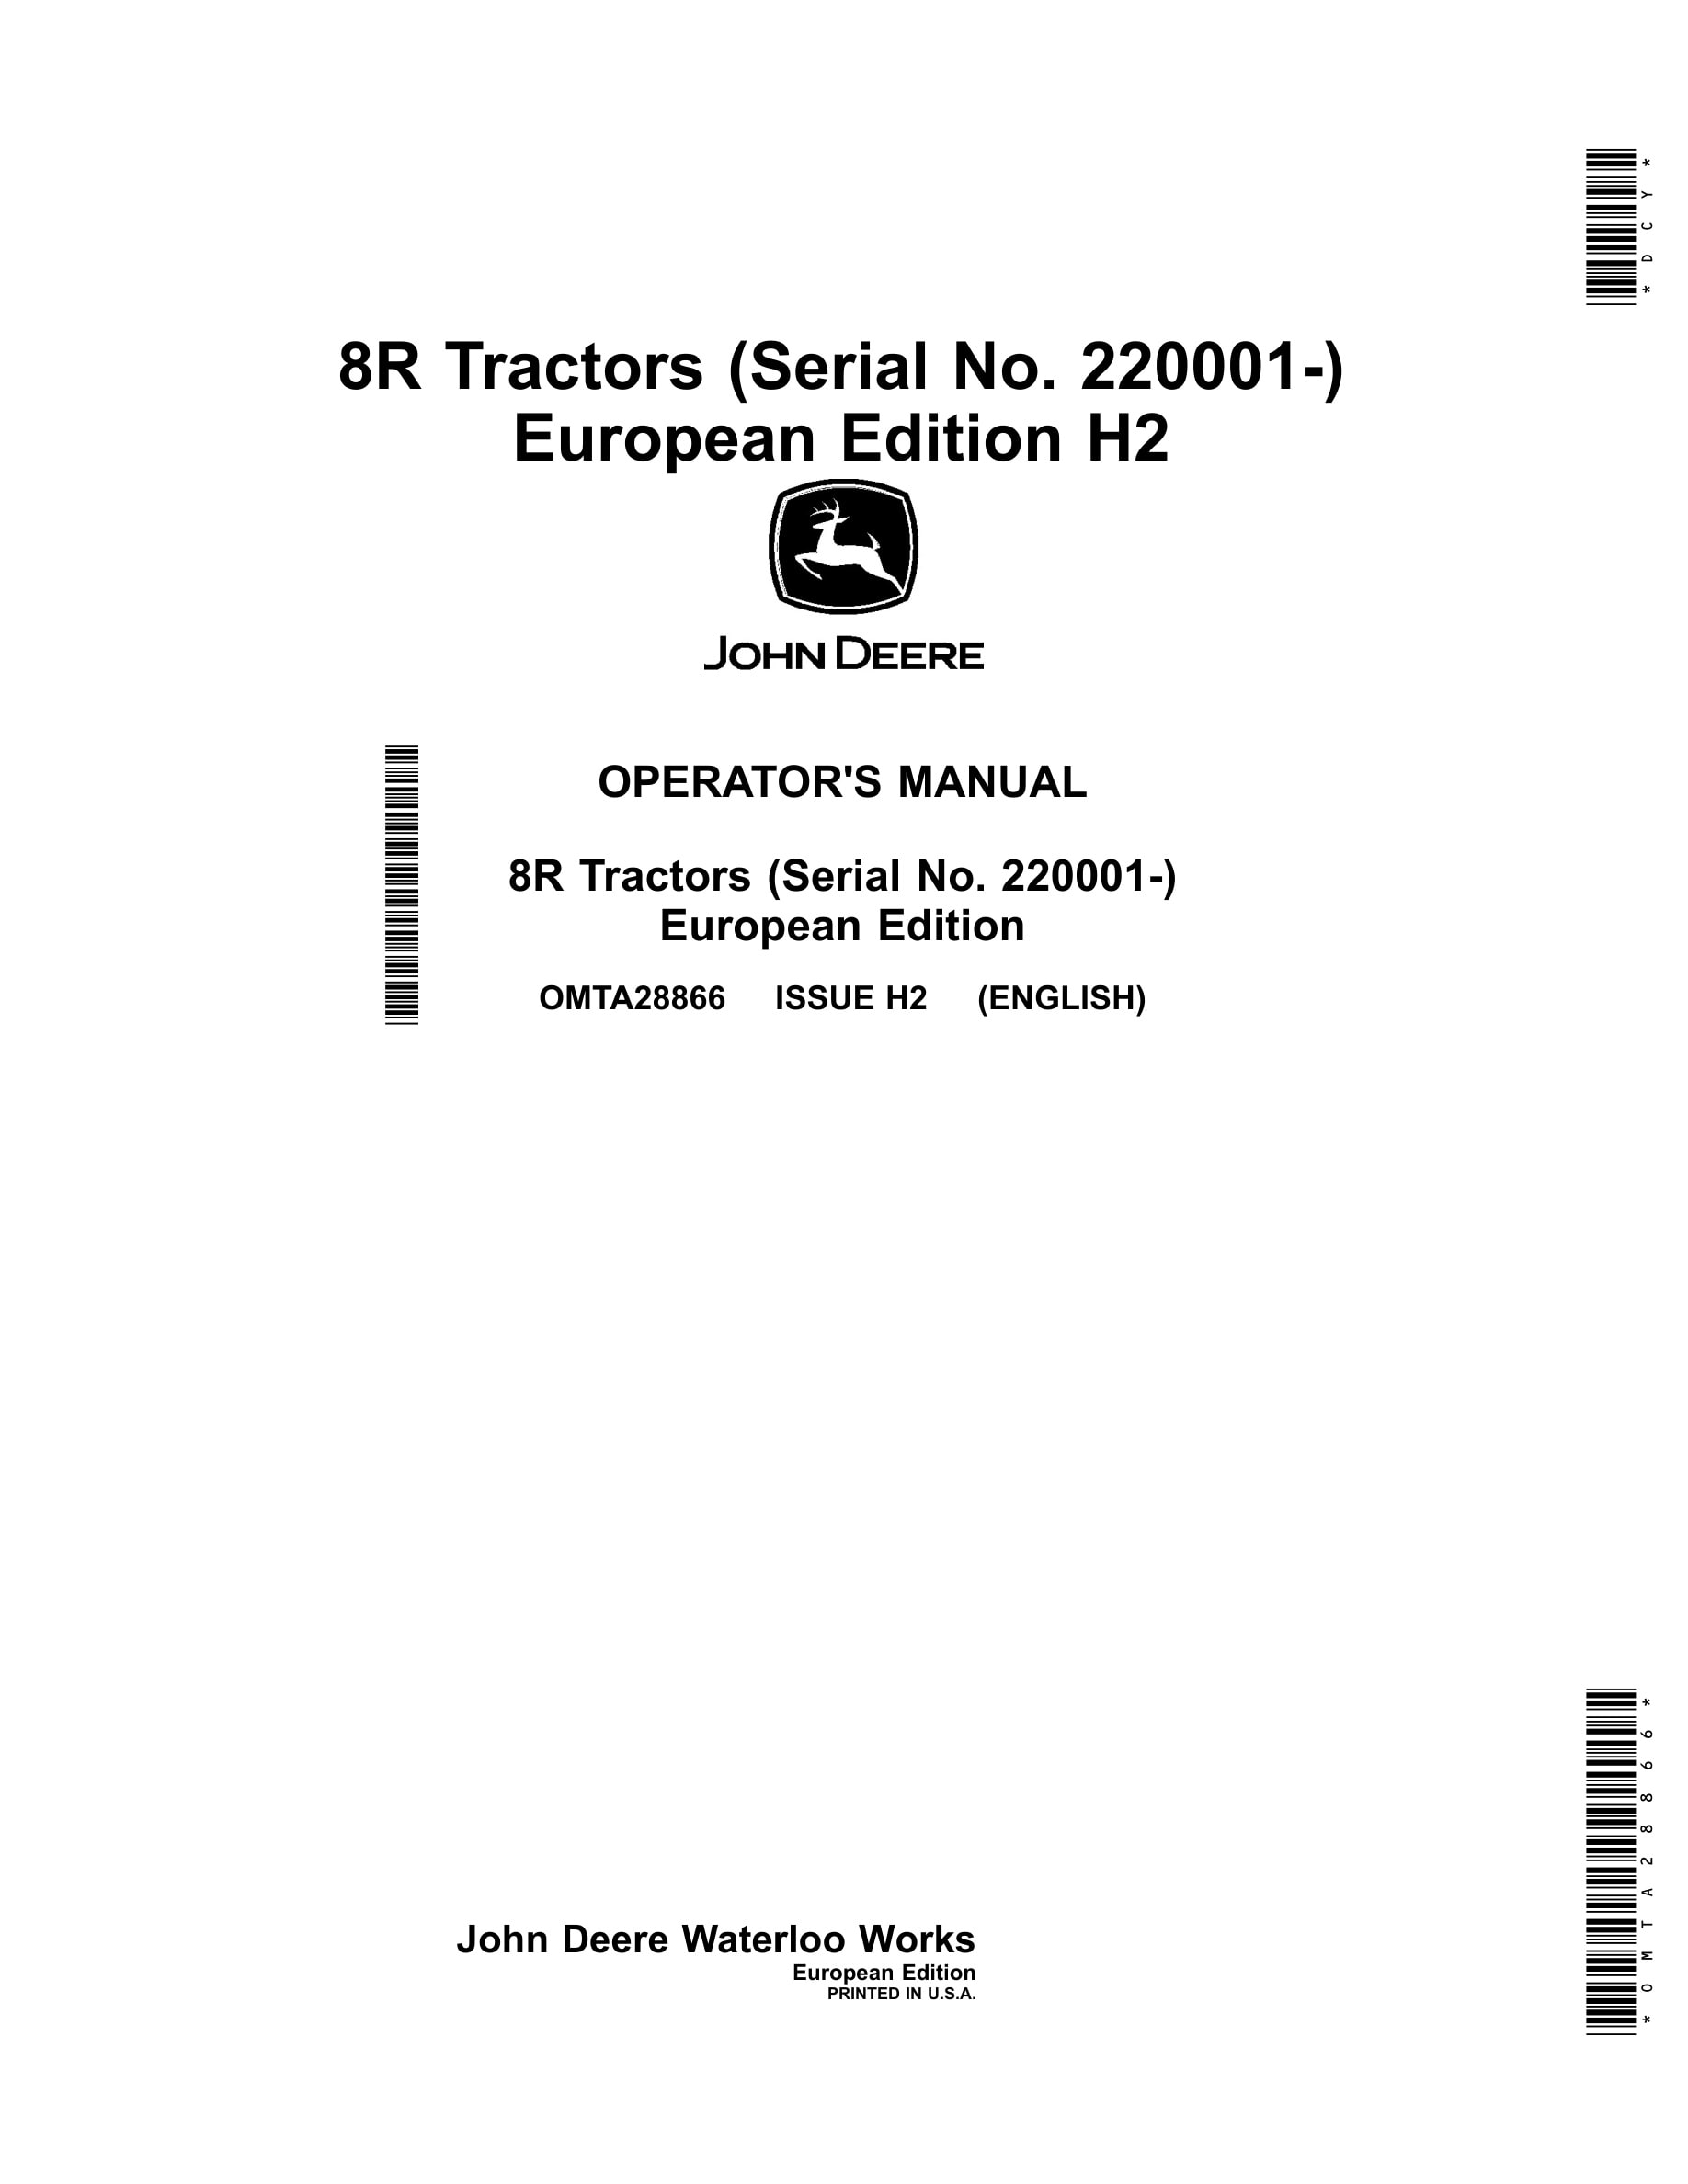 John Deere 8r Tractors Operator Manuals OMTA28866-1